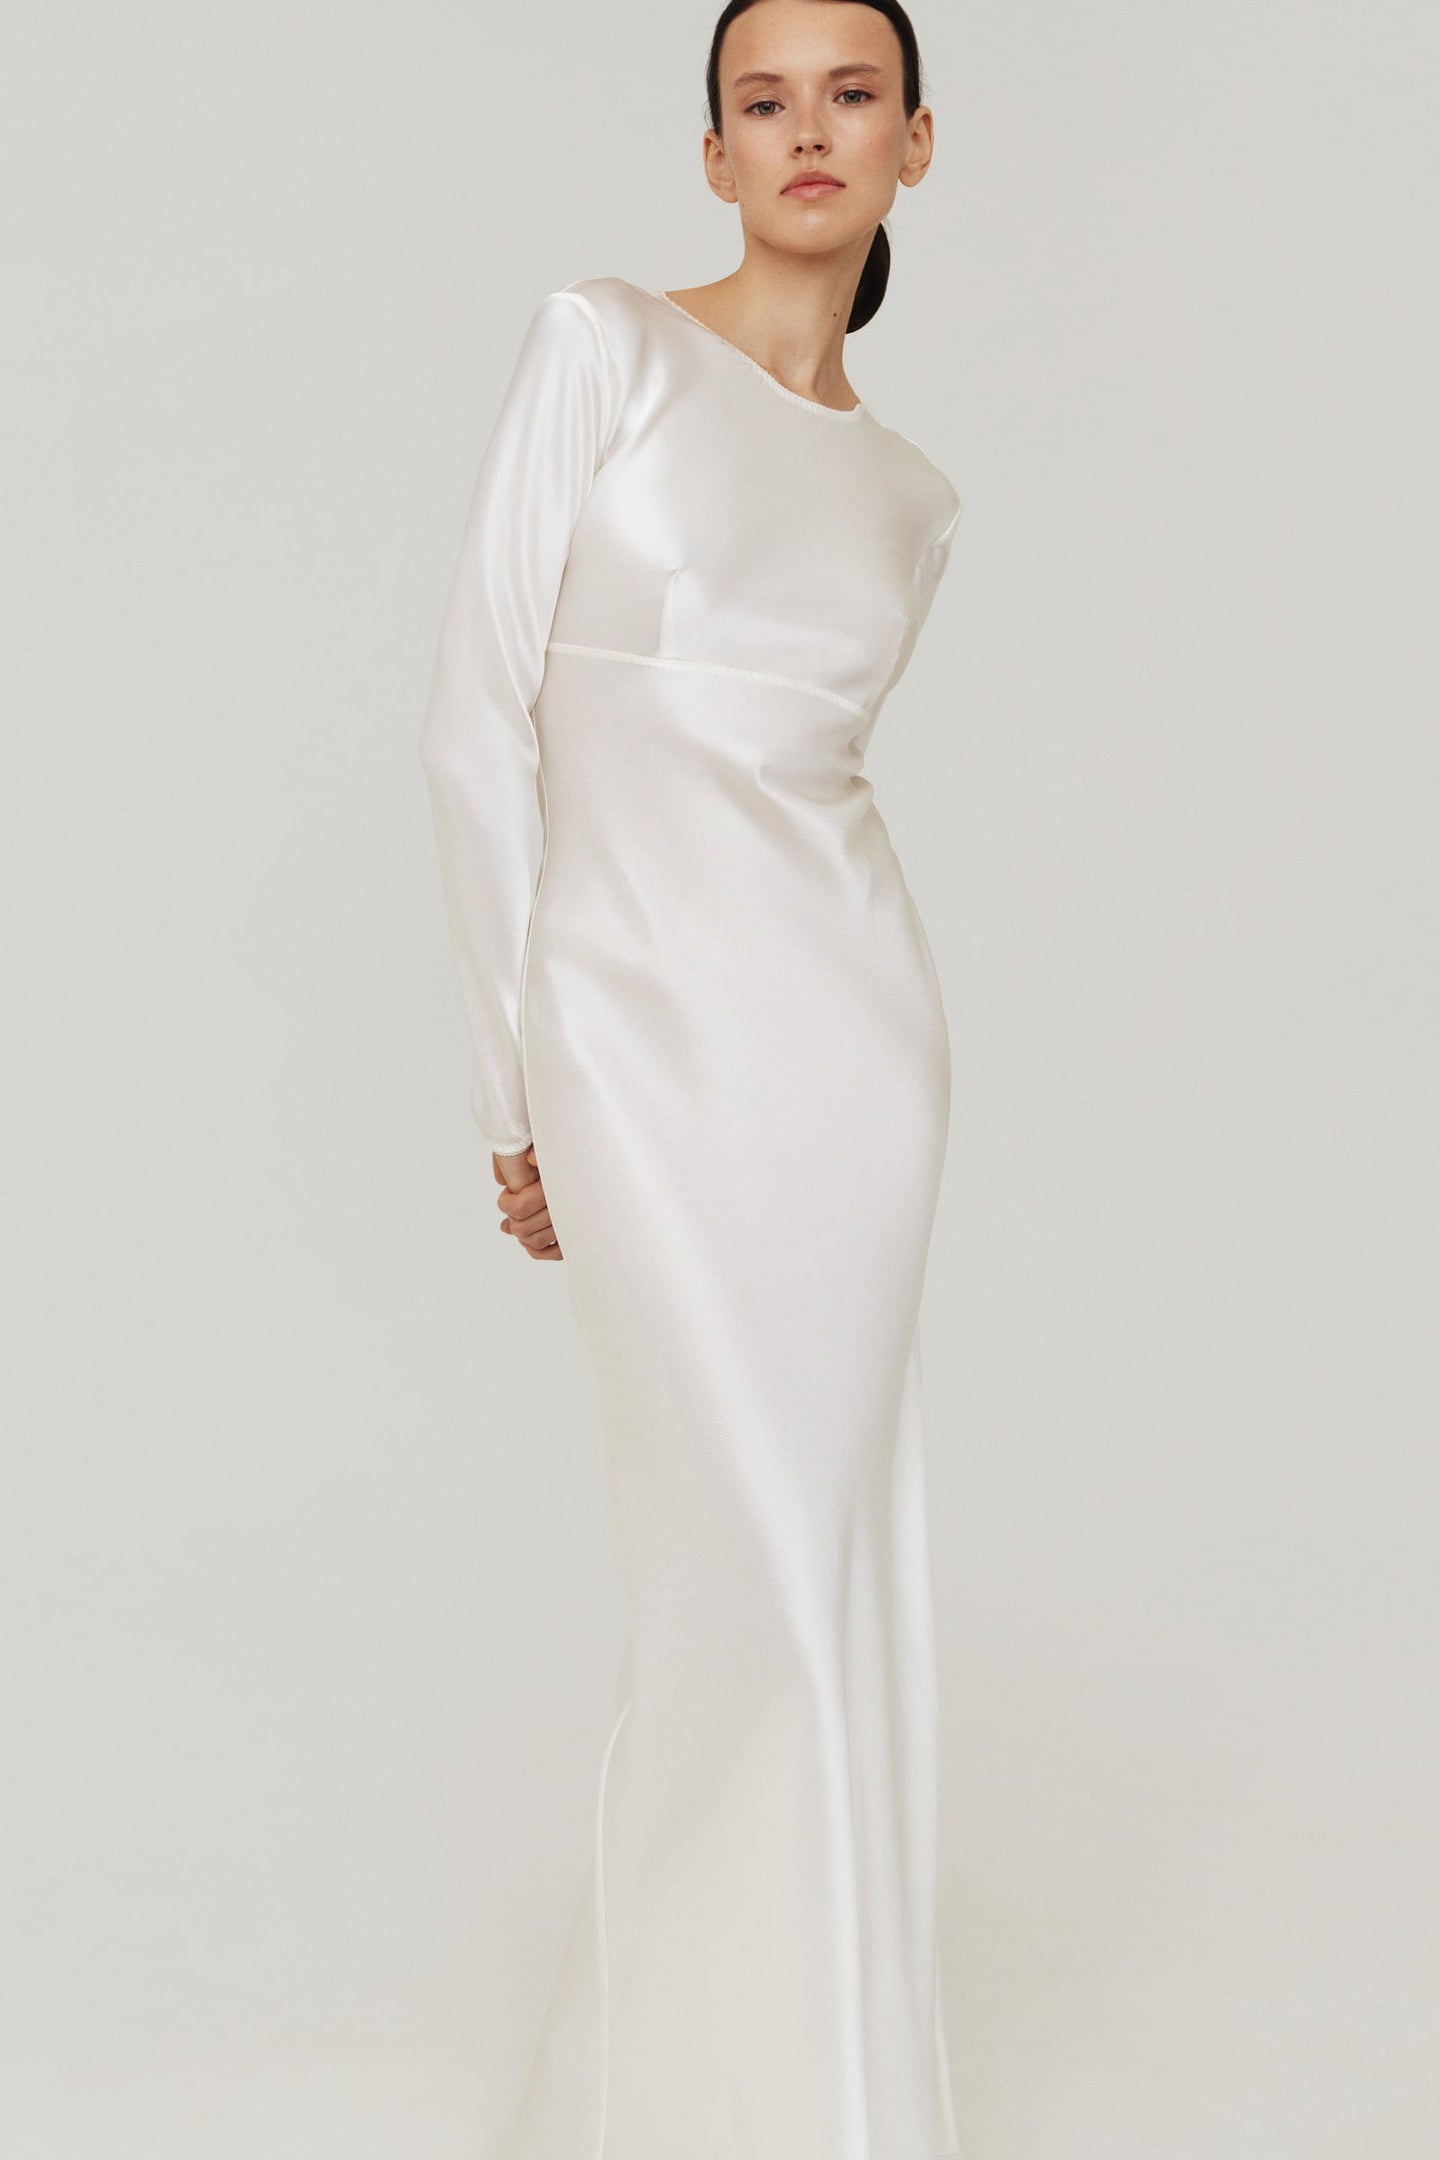 Model in Sima dress